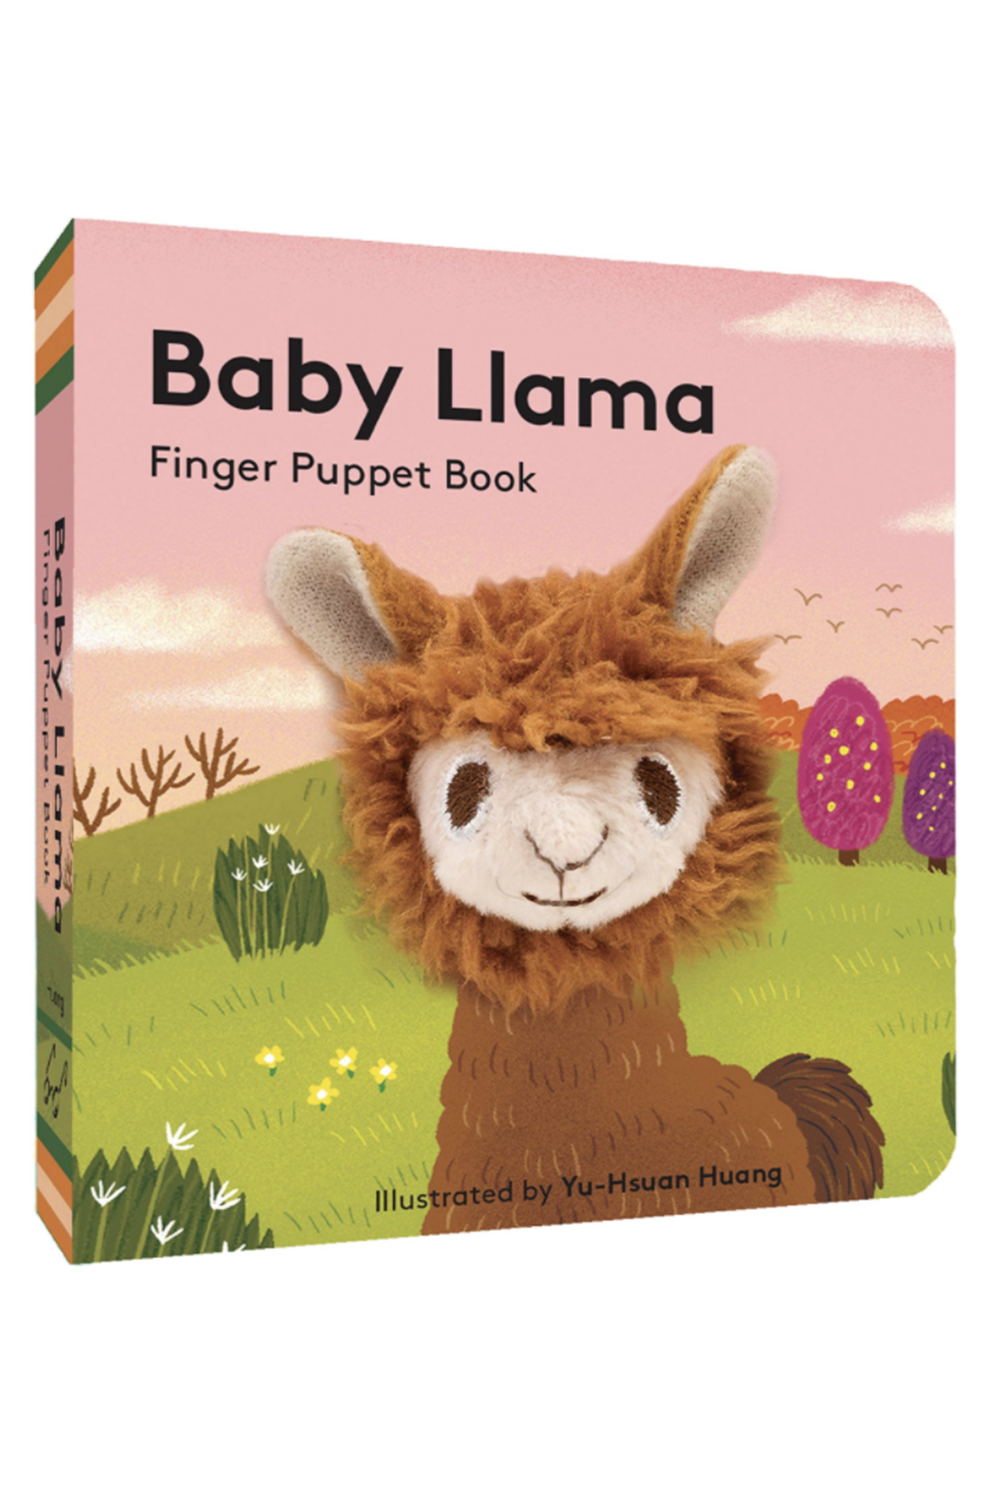 Finger Puppet Book - Baby Llama